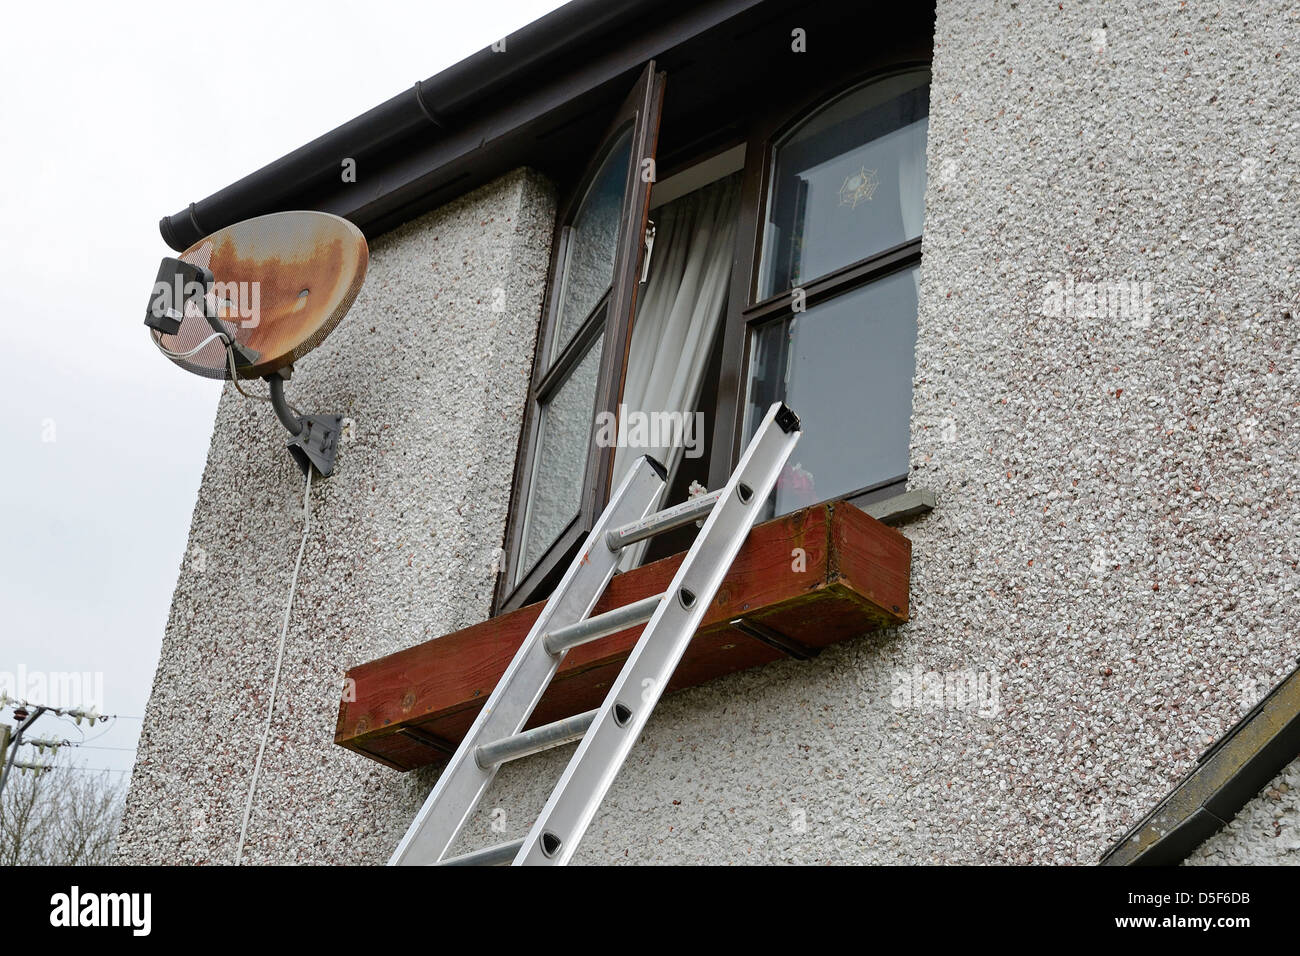 a ladder at an open window Stock Photo